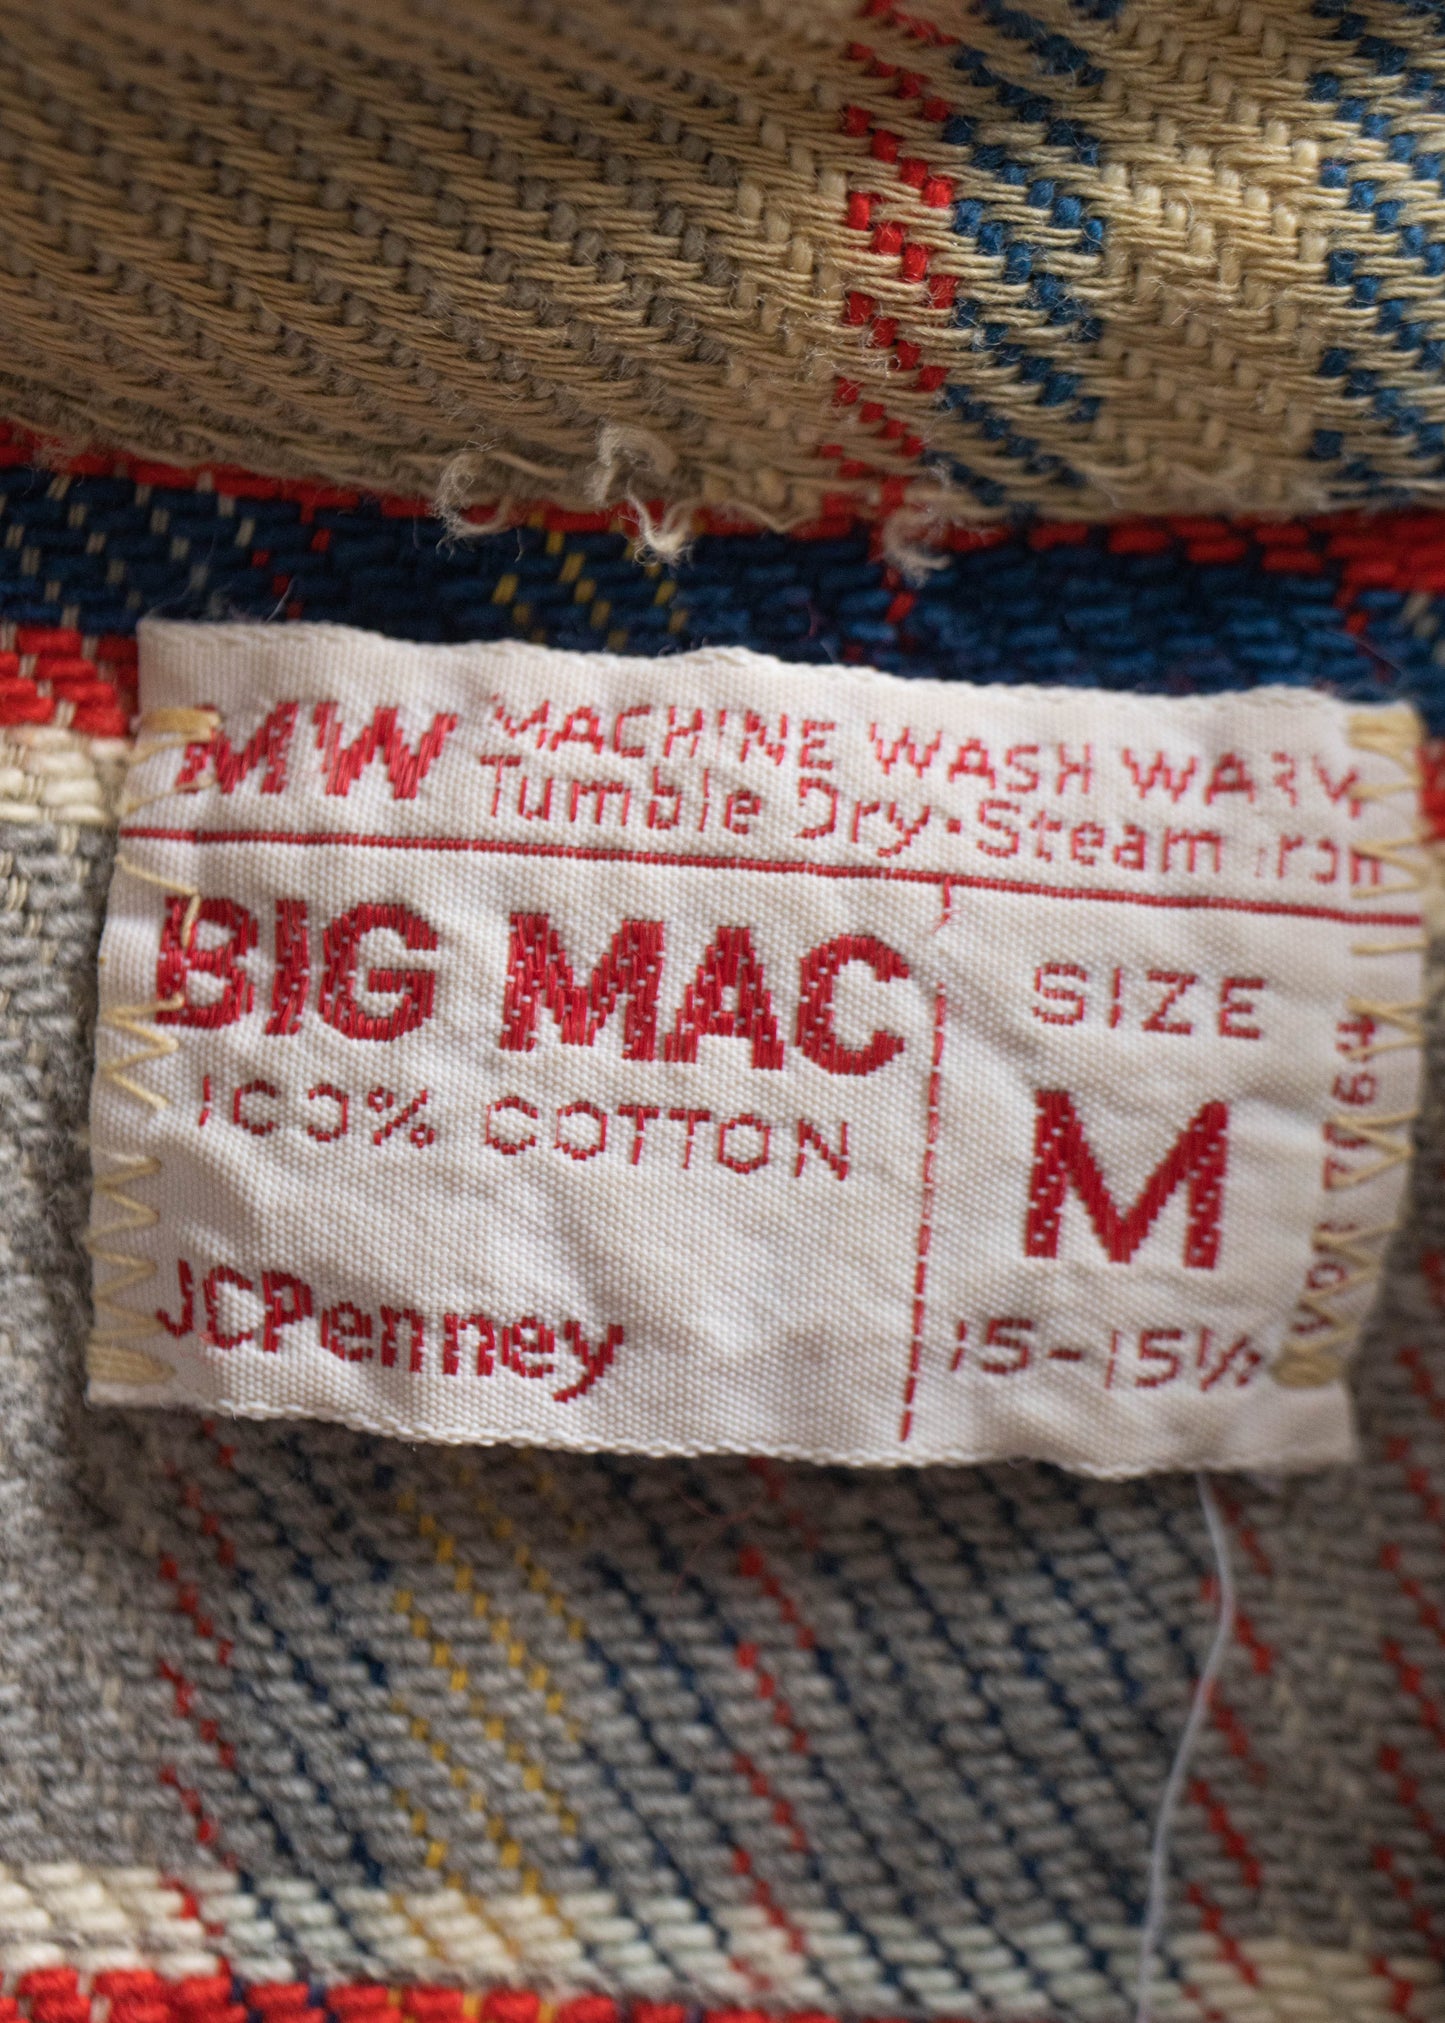 Vintage 1970s Big Mac by JC Penney Cotton Flannel Button Up Shirt Size M/L